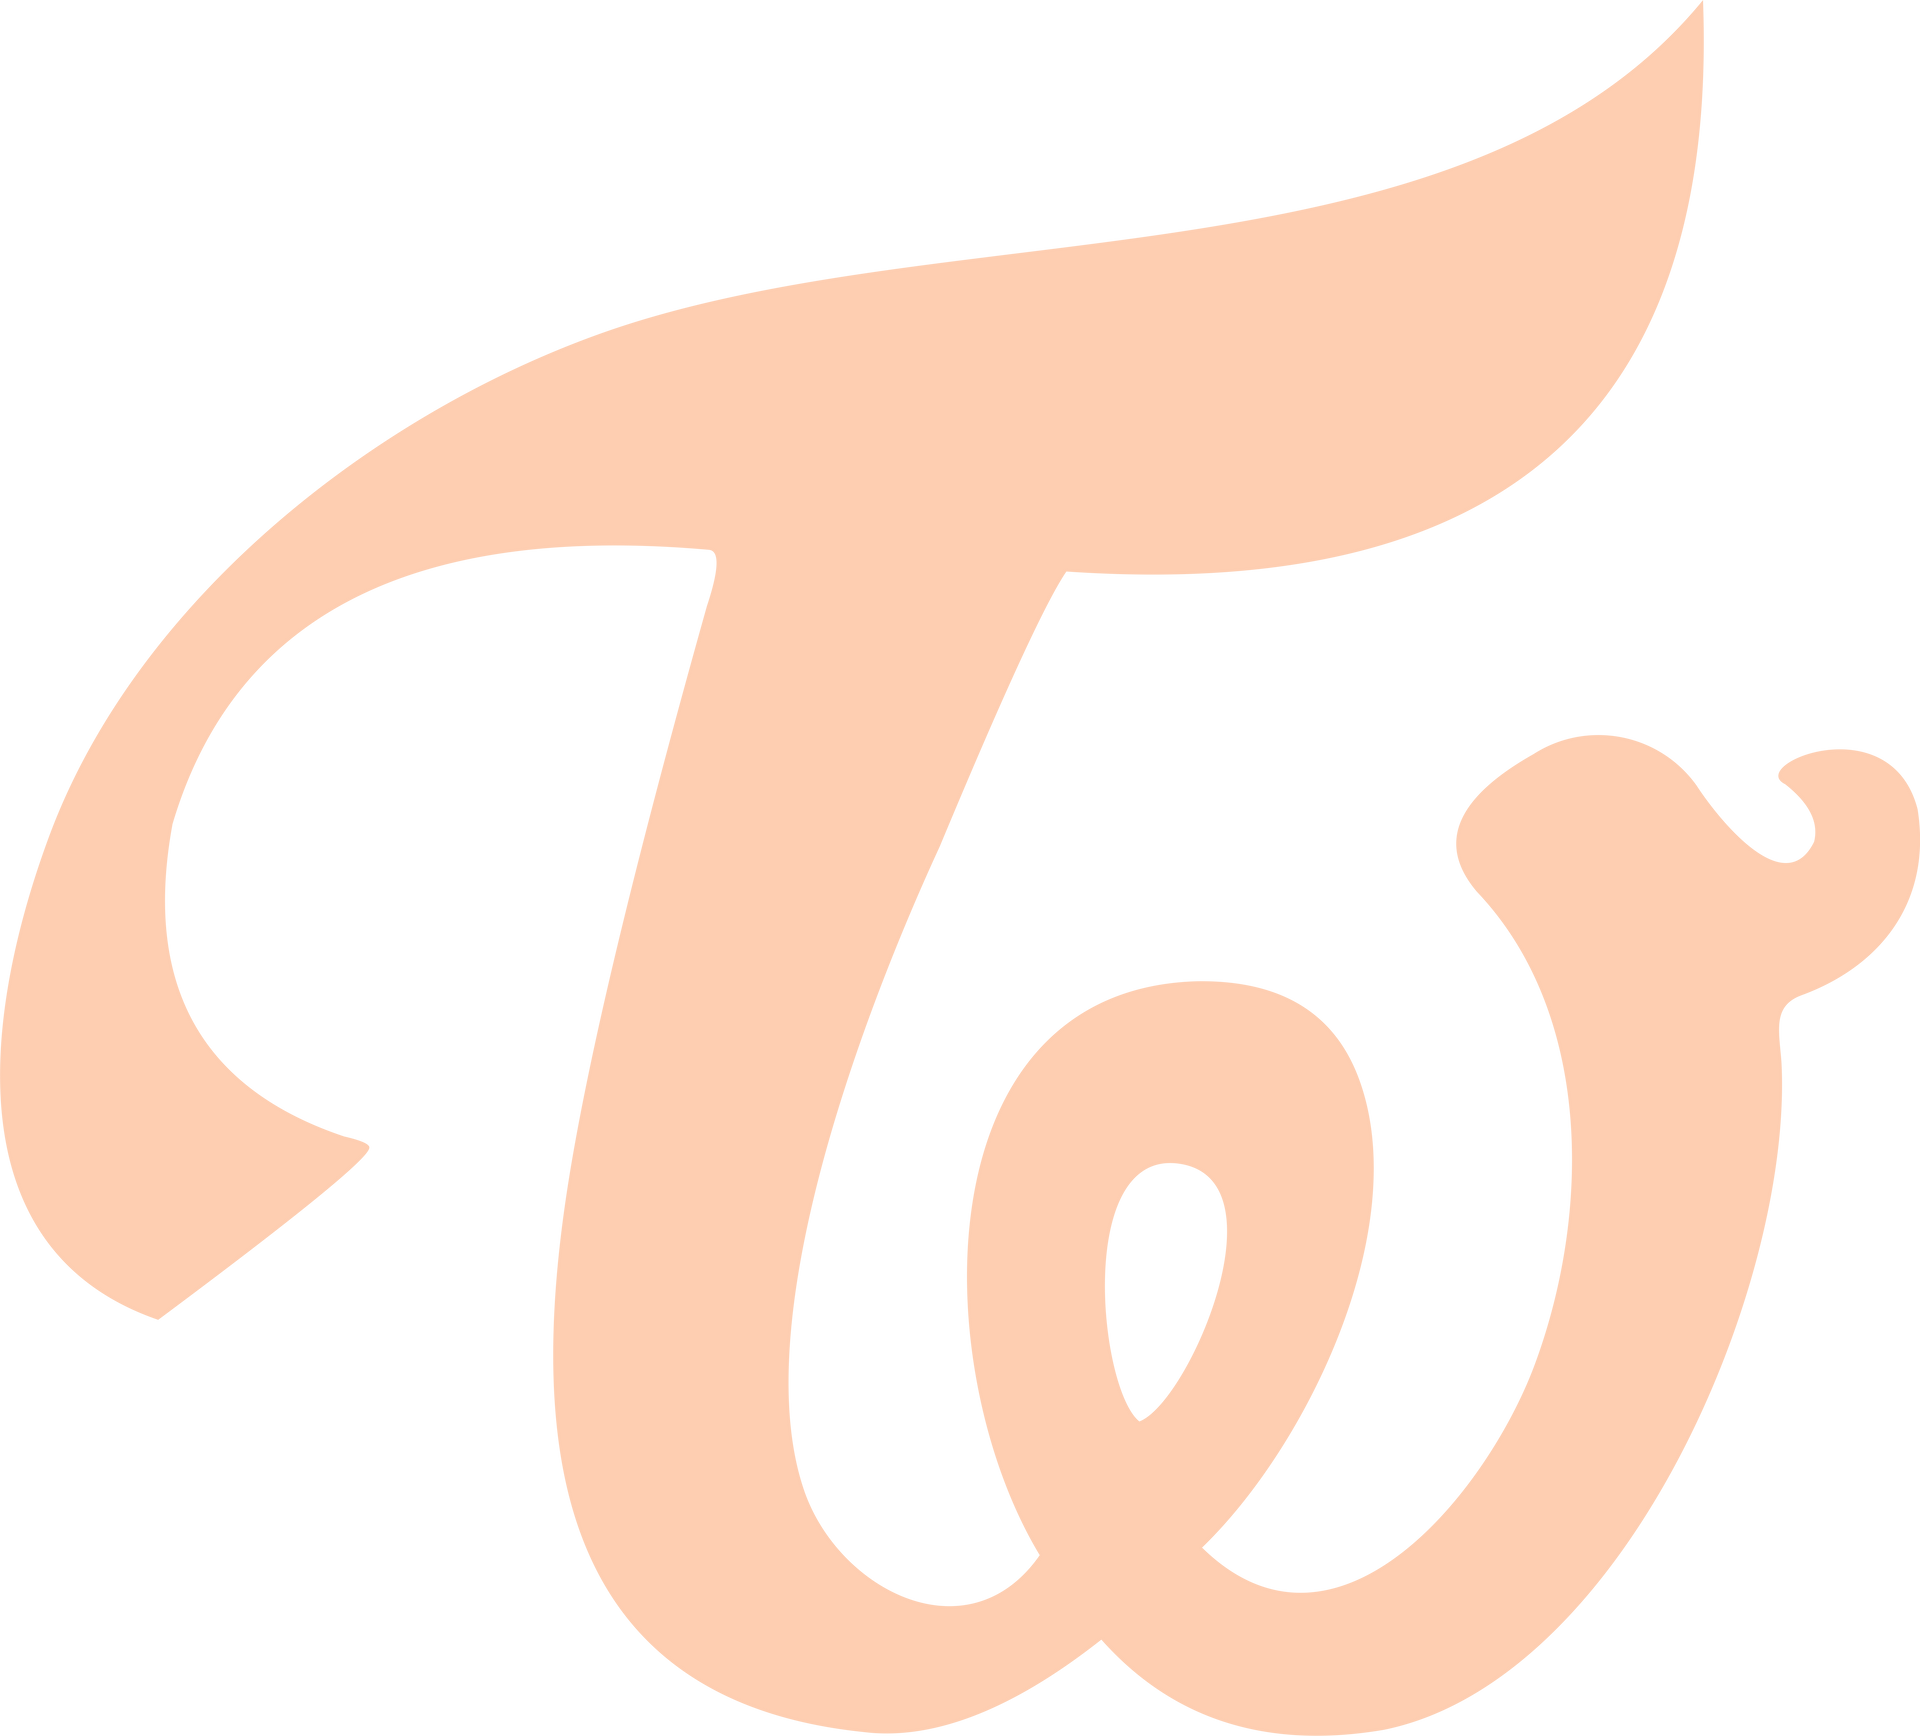 Twice Logo by Mimilevi on DeviantArt